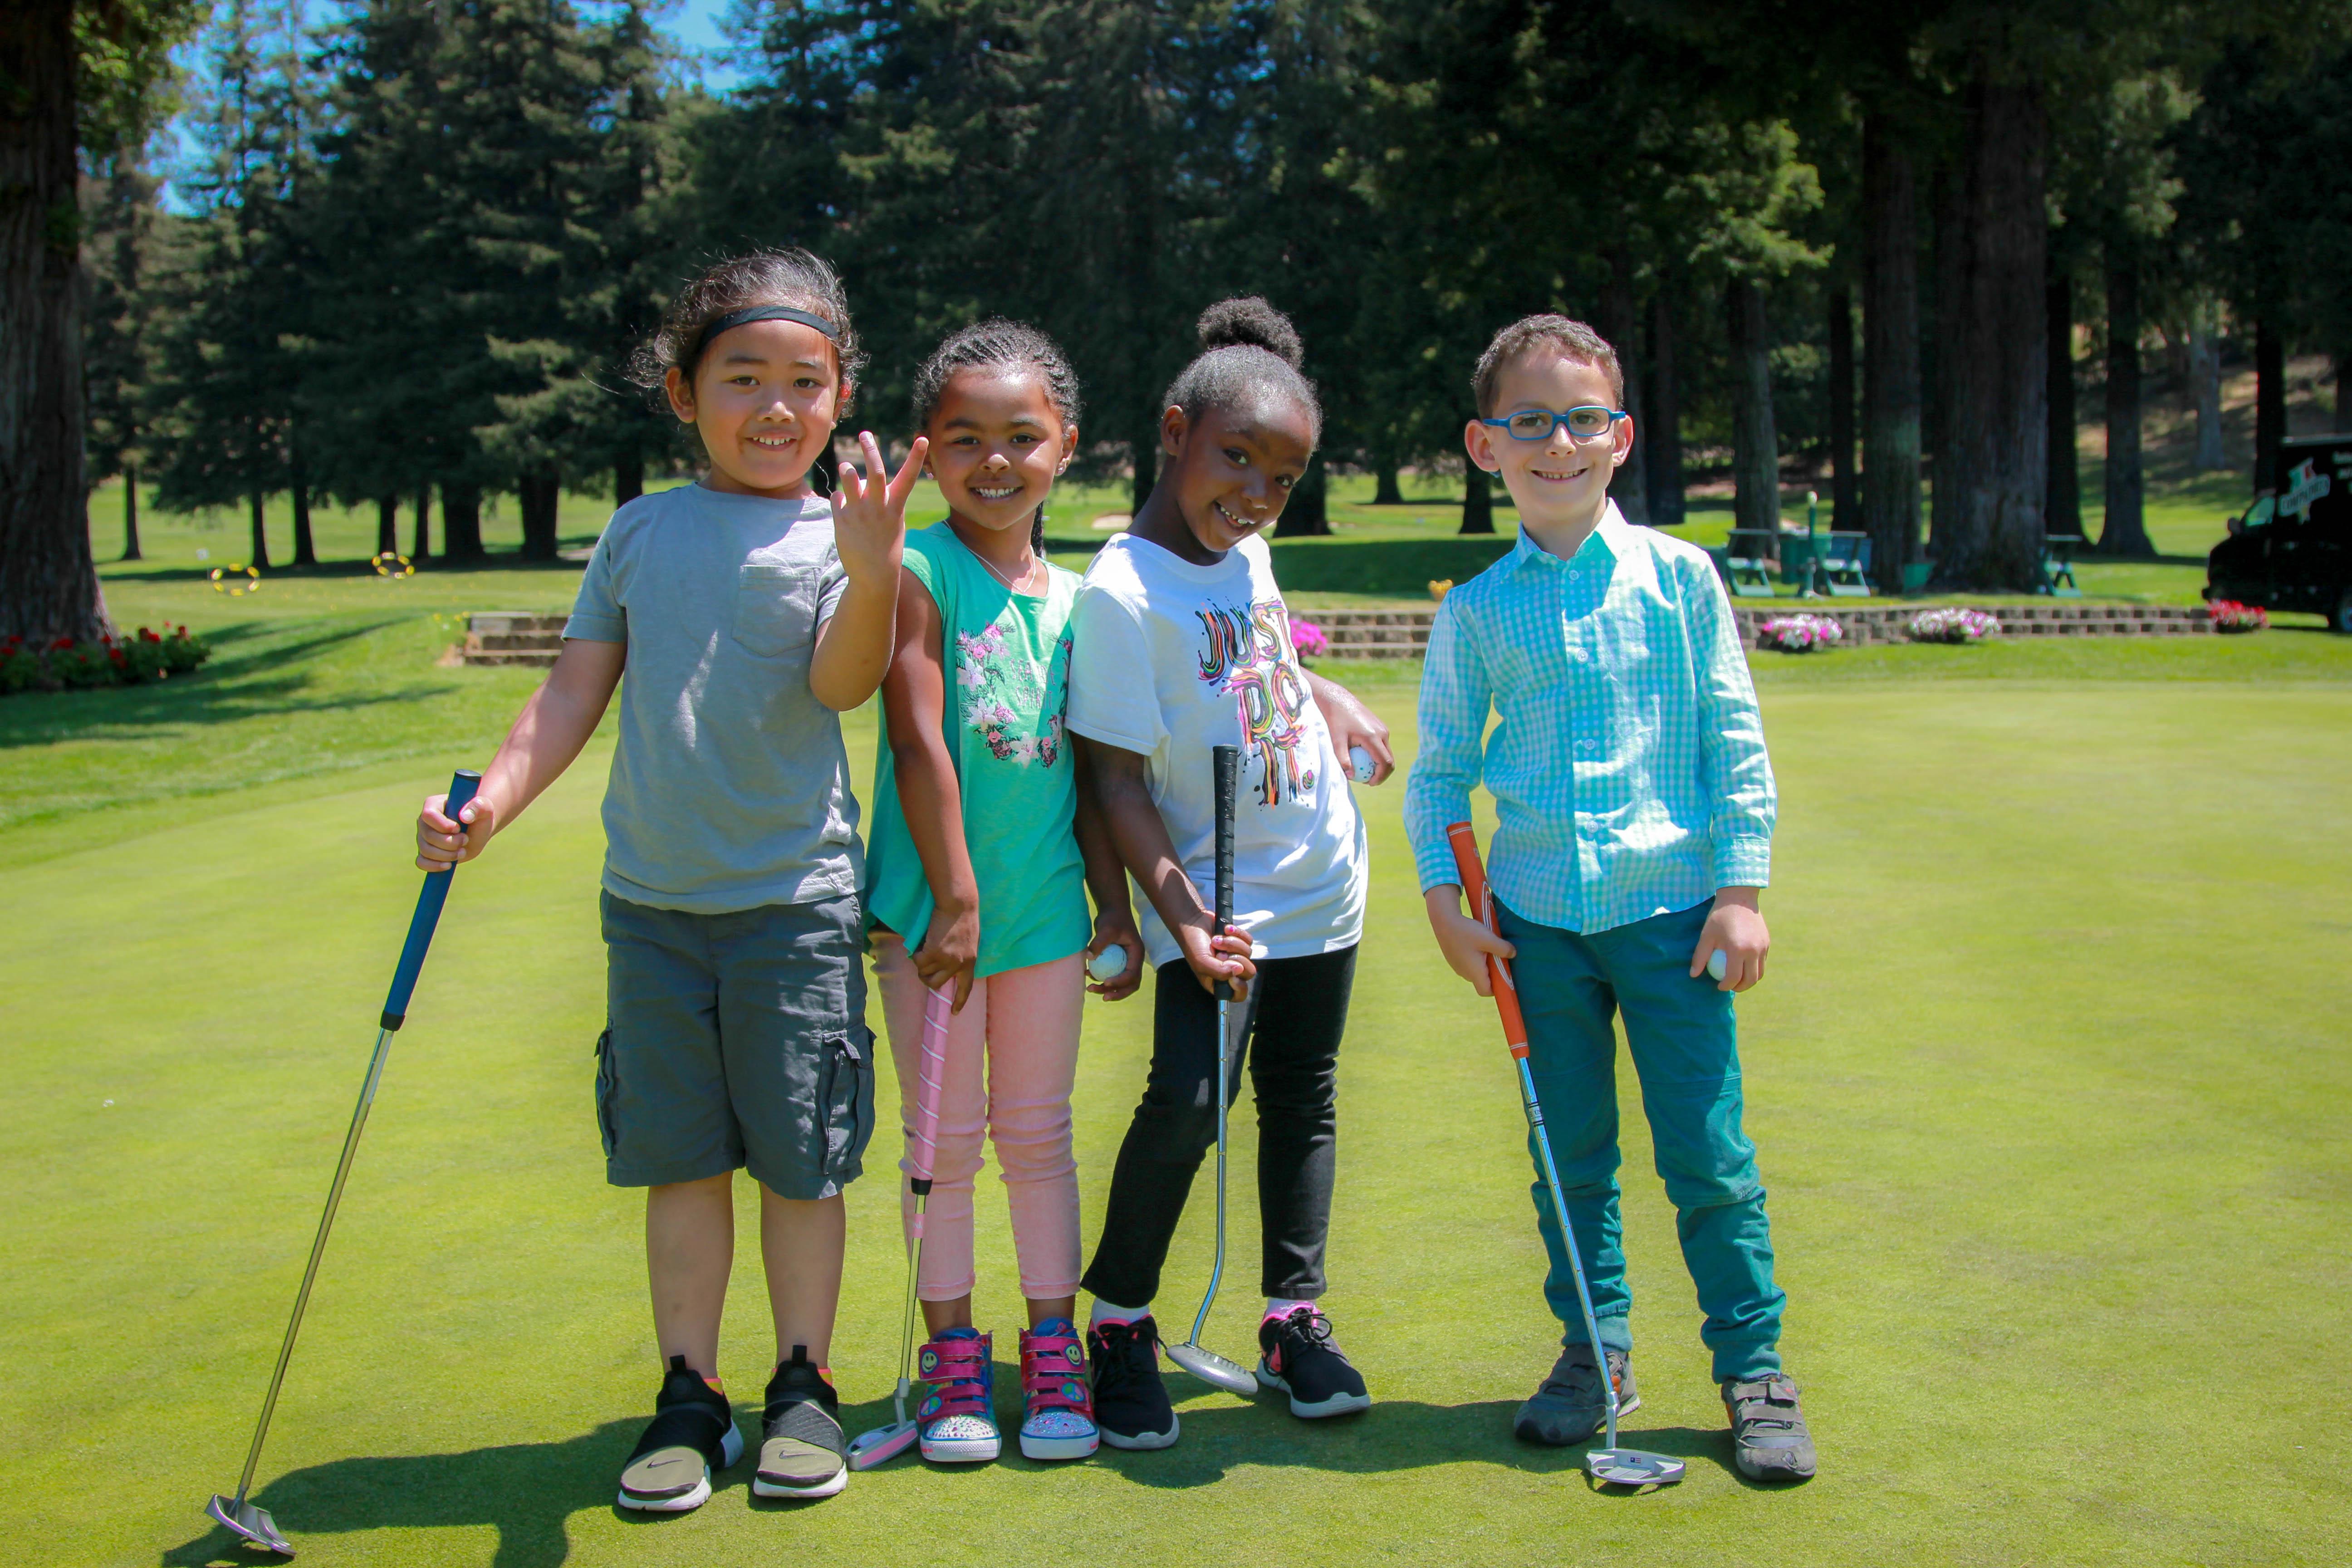 17th Annual "Fore the Children" Golf Tournament